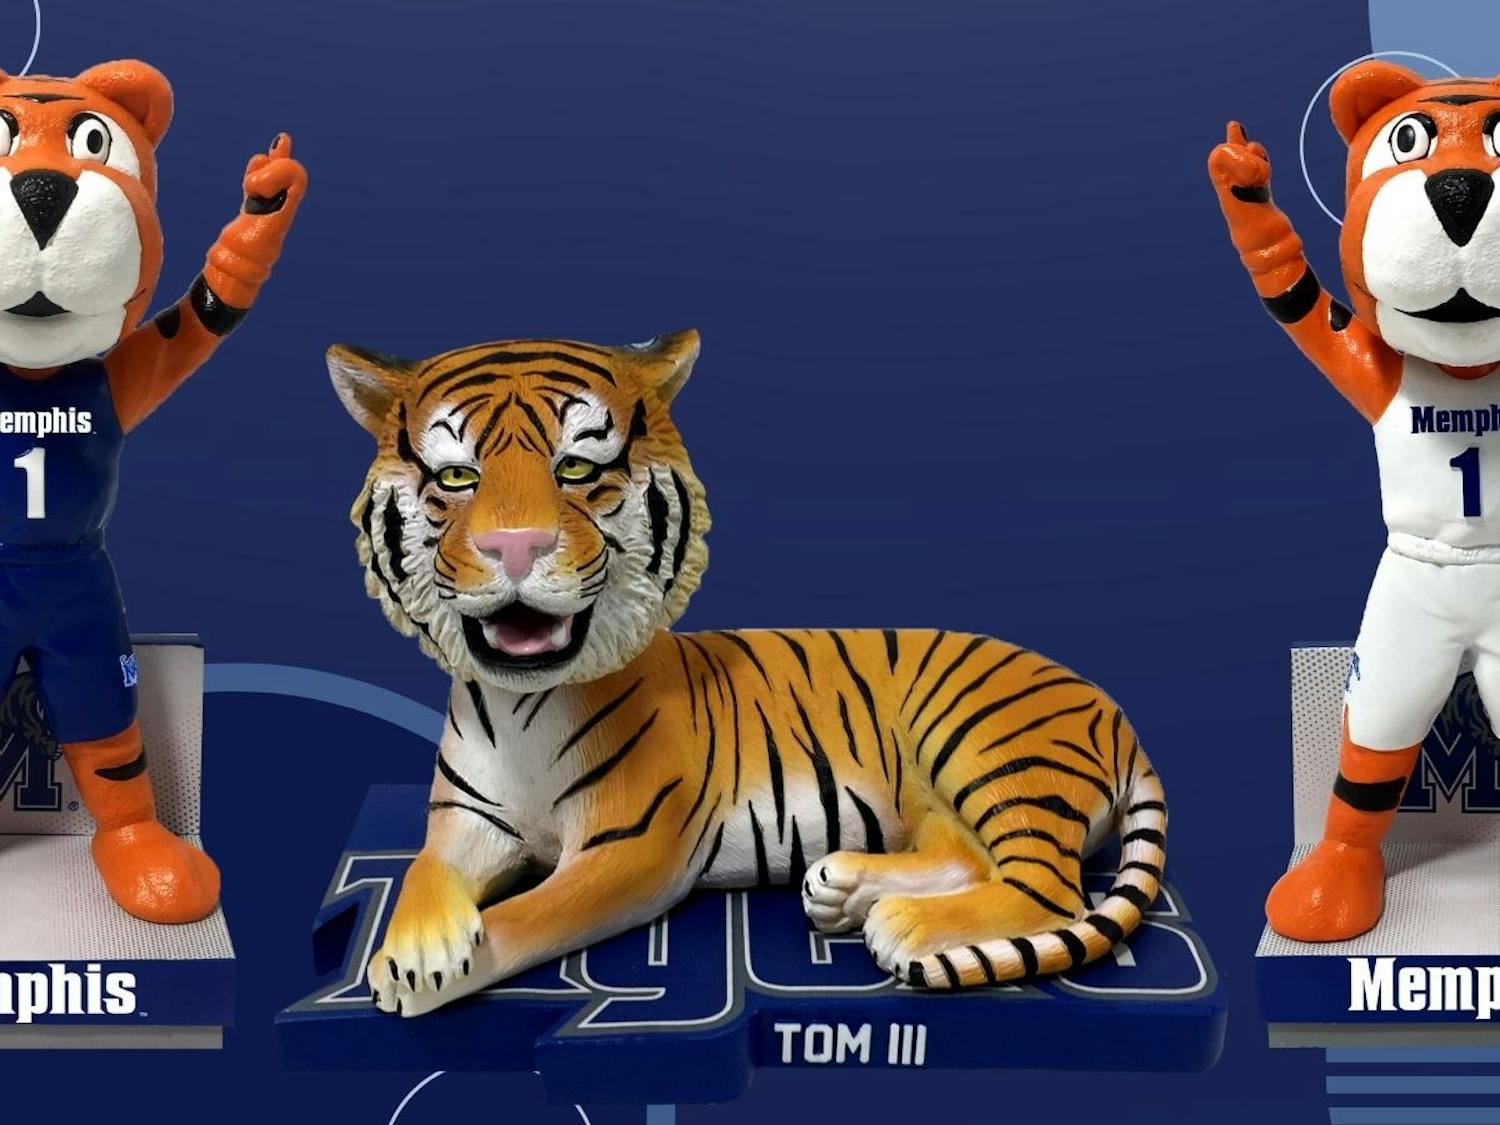 All 3 Memphis Tigers Bobbleheads (3).jpg